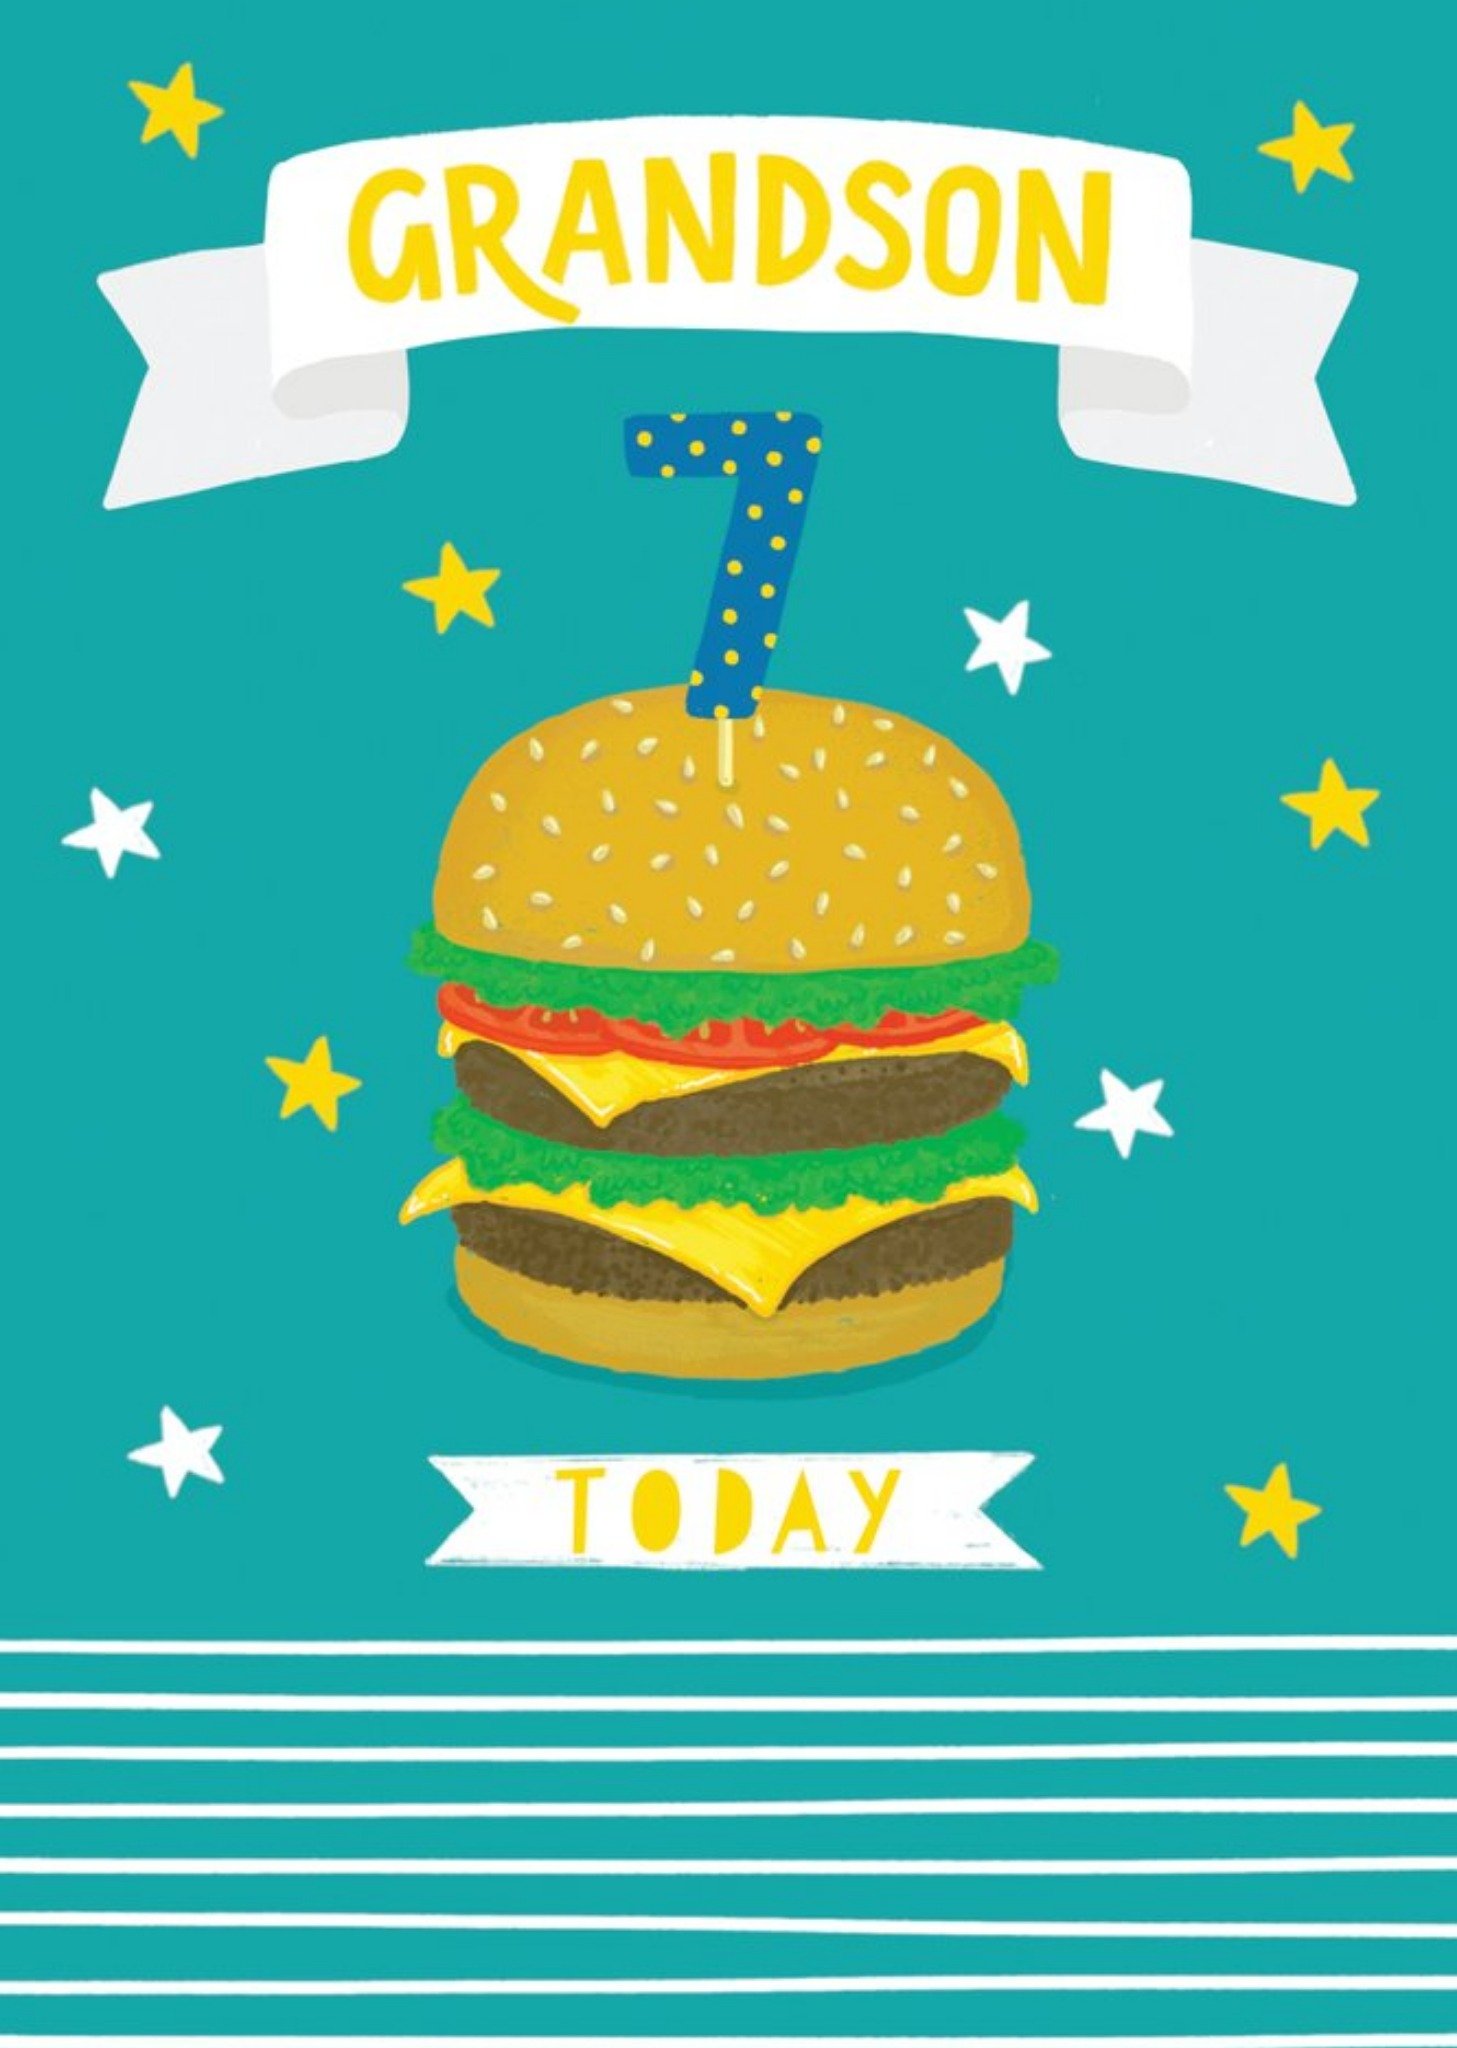 Moonpig Cute Illustration Burger Grandson 7 Today, Large Card